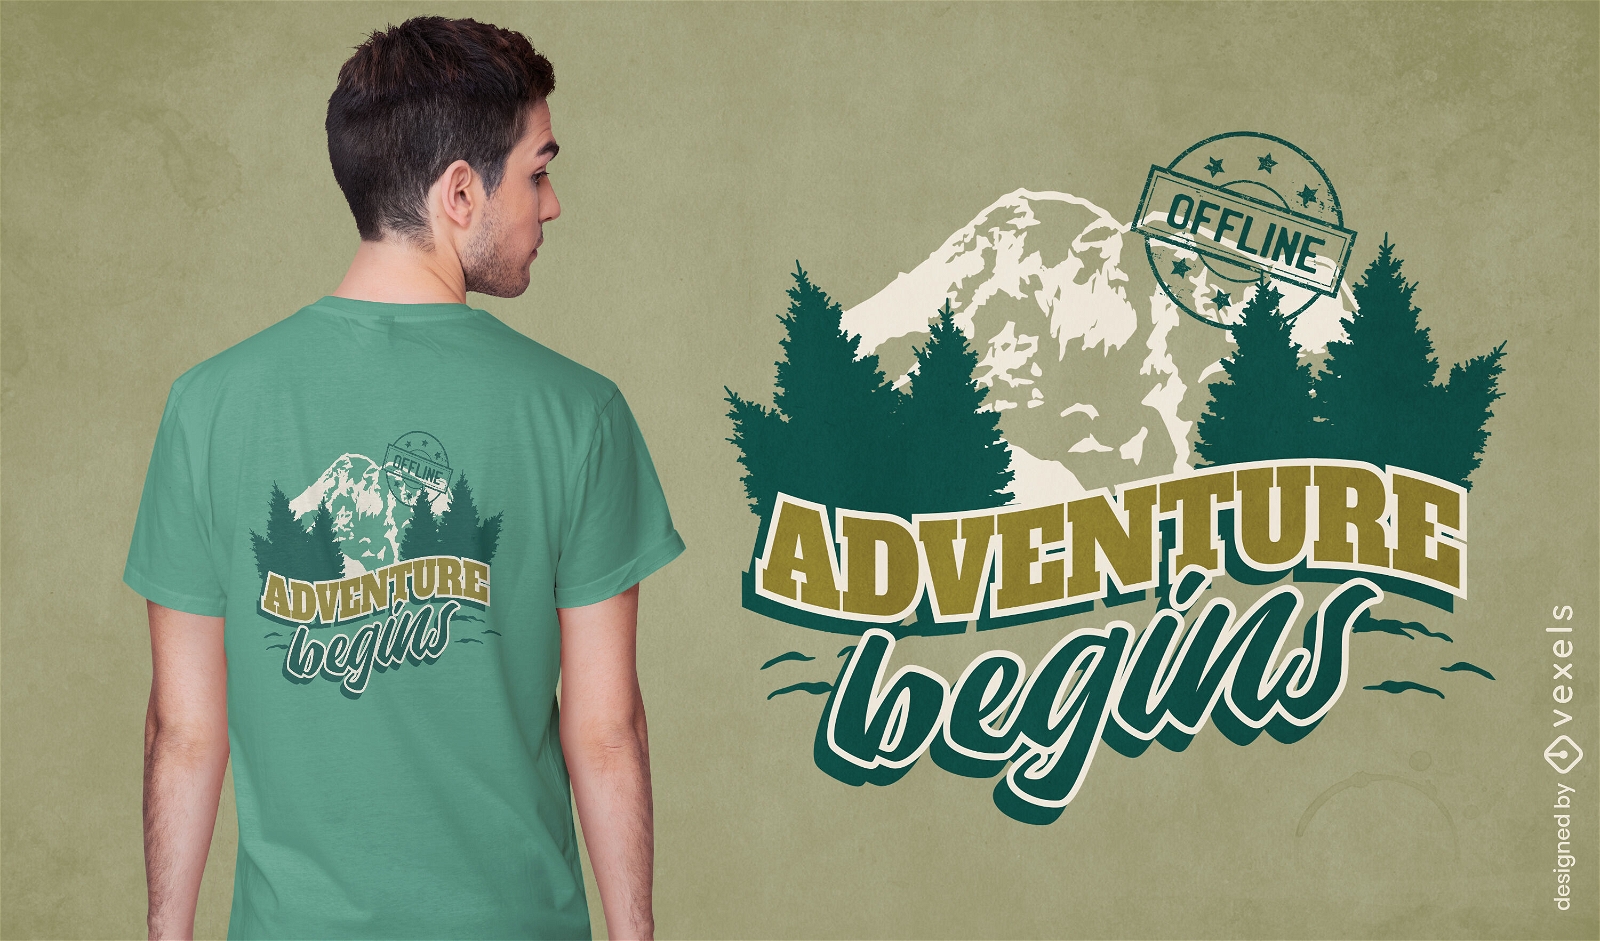 Adventure begins t-shirt design